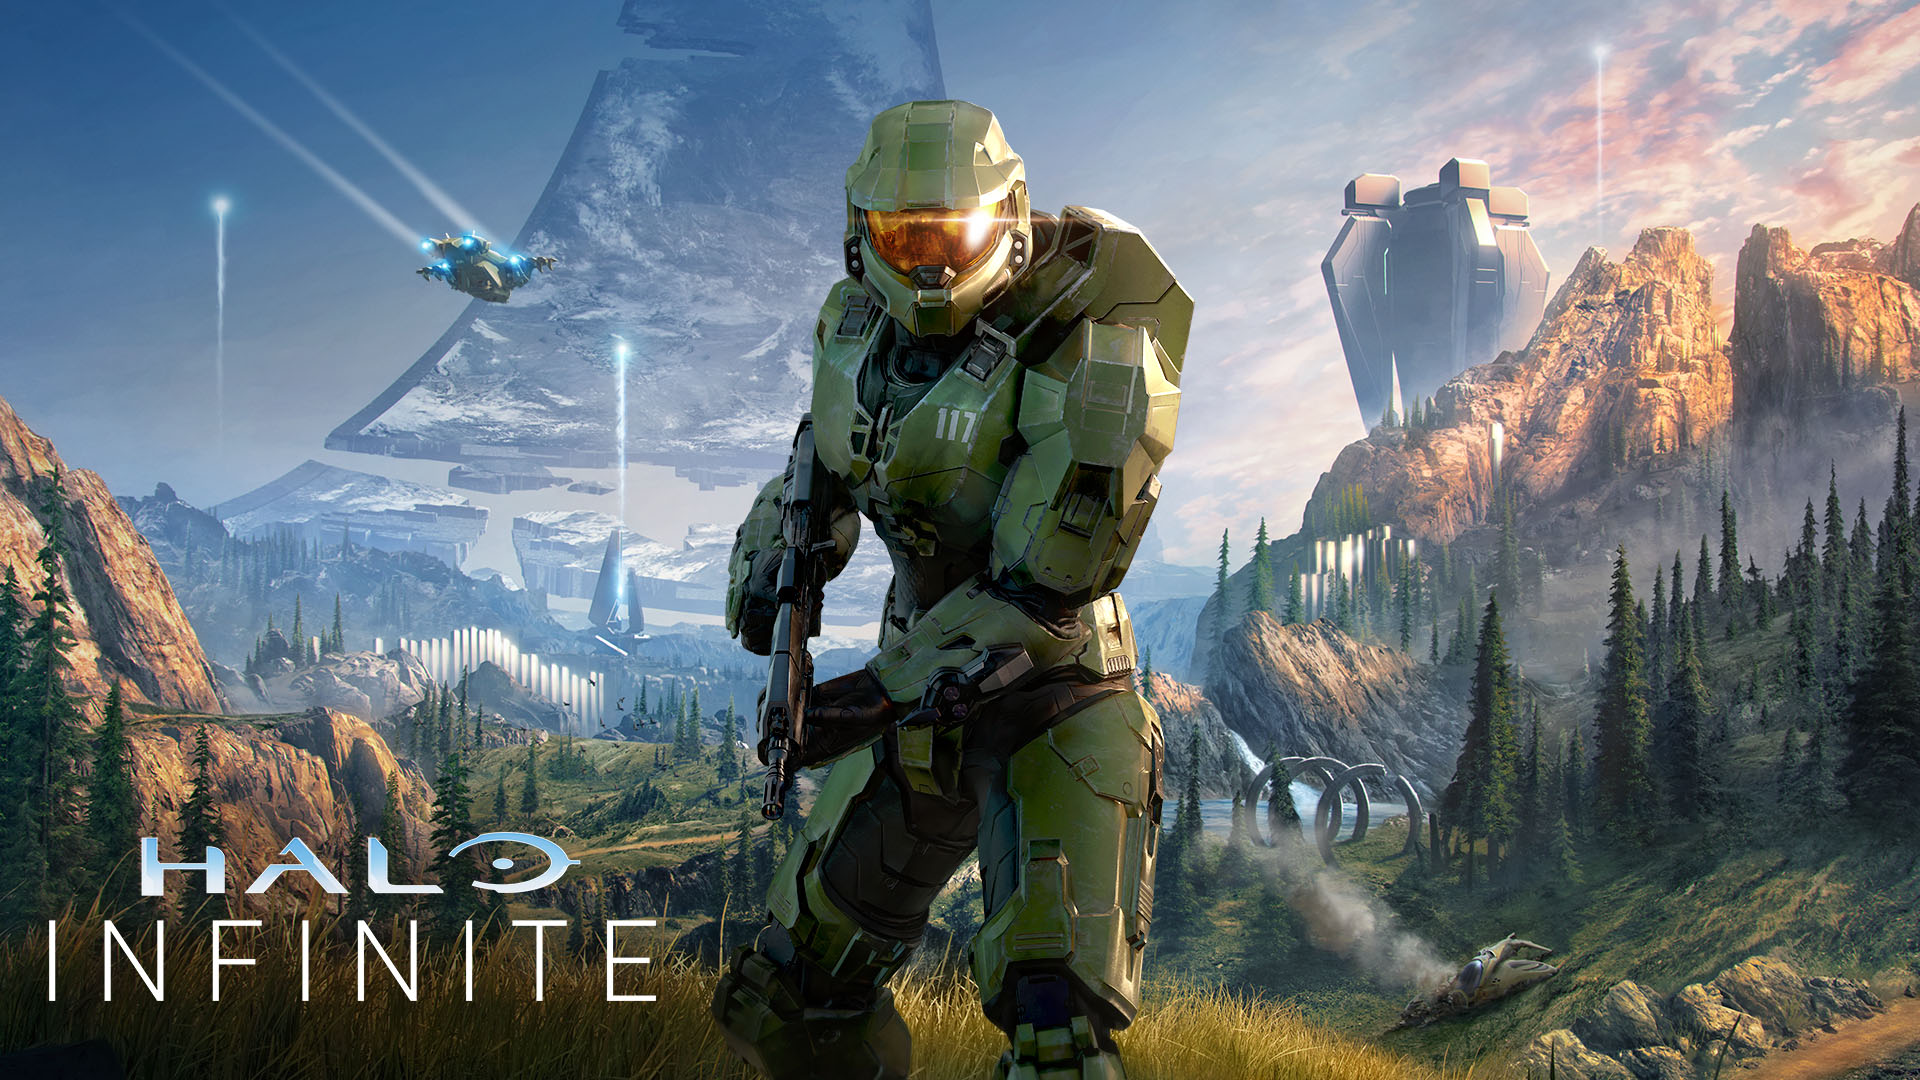 Xbox Pc新作 Halo Infinite プレイ動画初公開 チーフがフックで立体機動 高速戦闘 Engadget 日本版